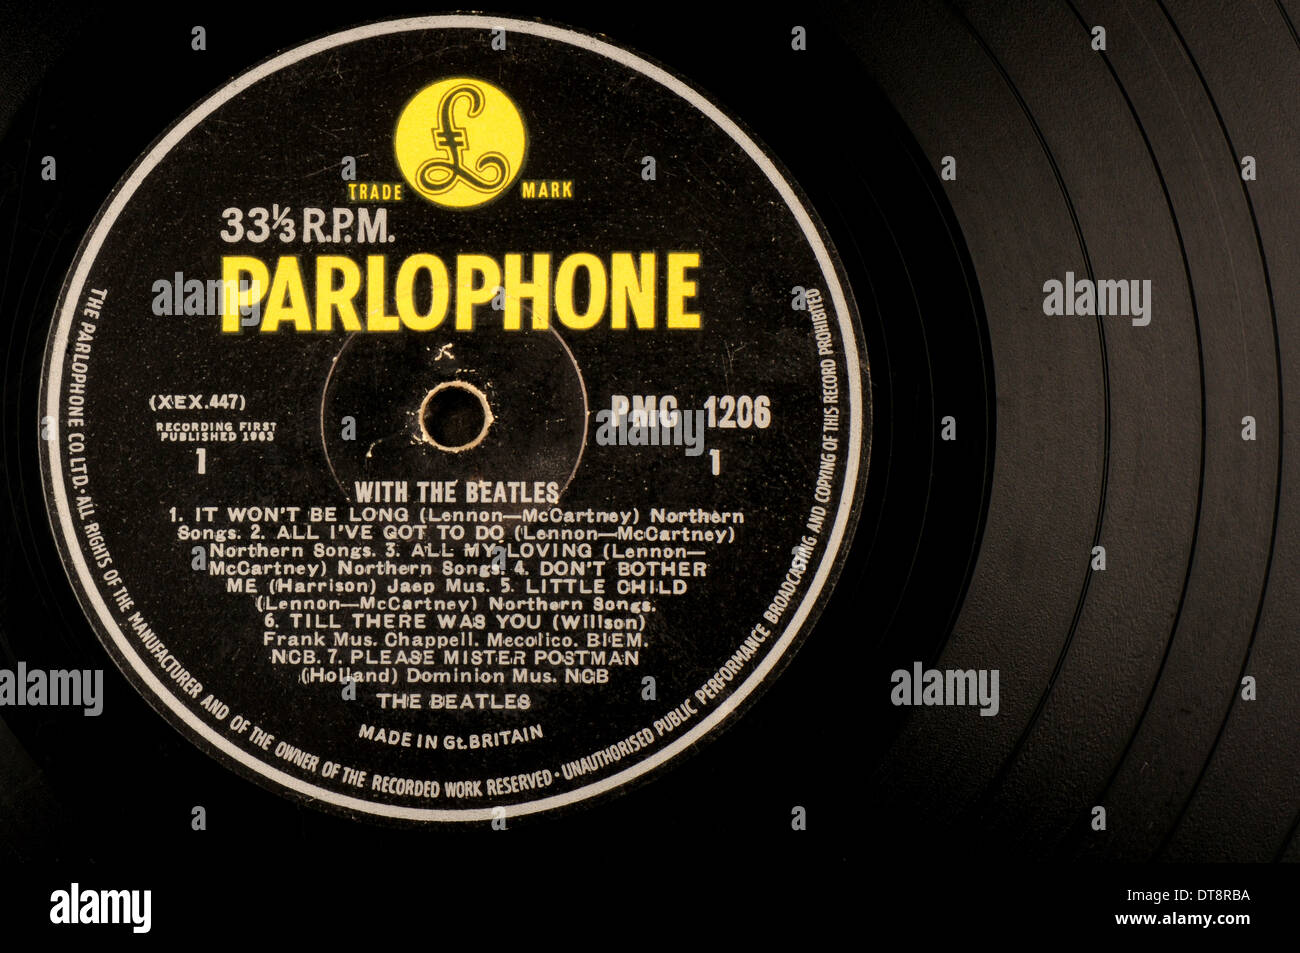 Originale di album dei Beatles con etichetta Parlophone Foto Stock